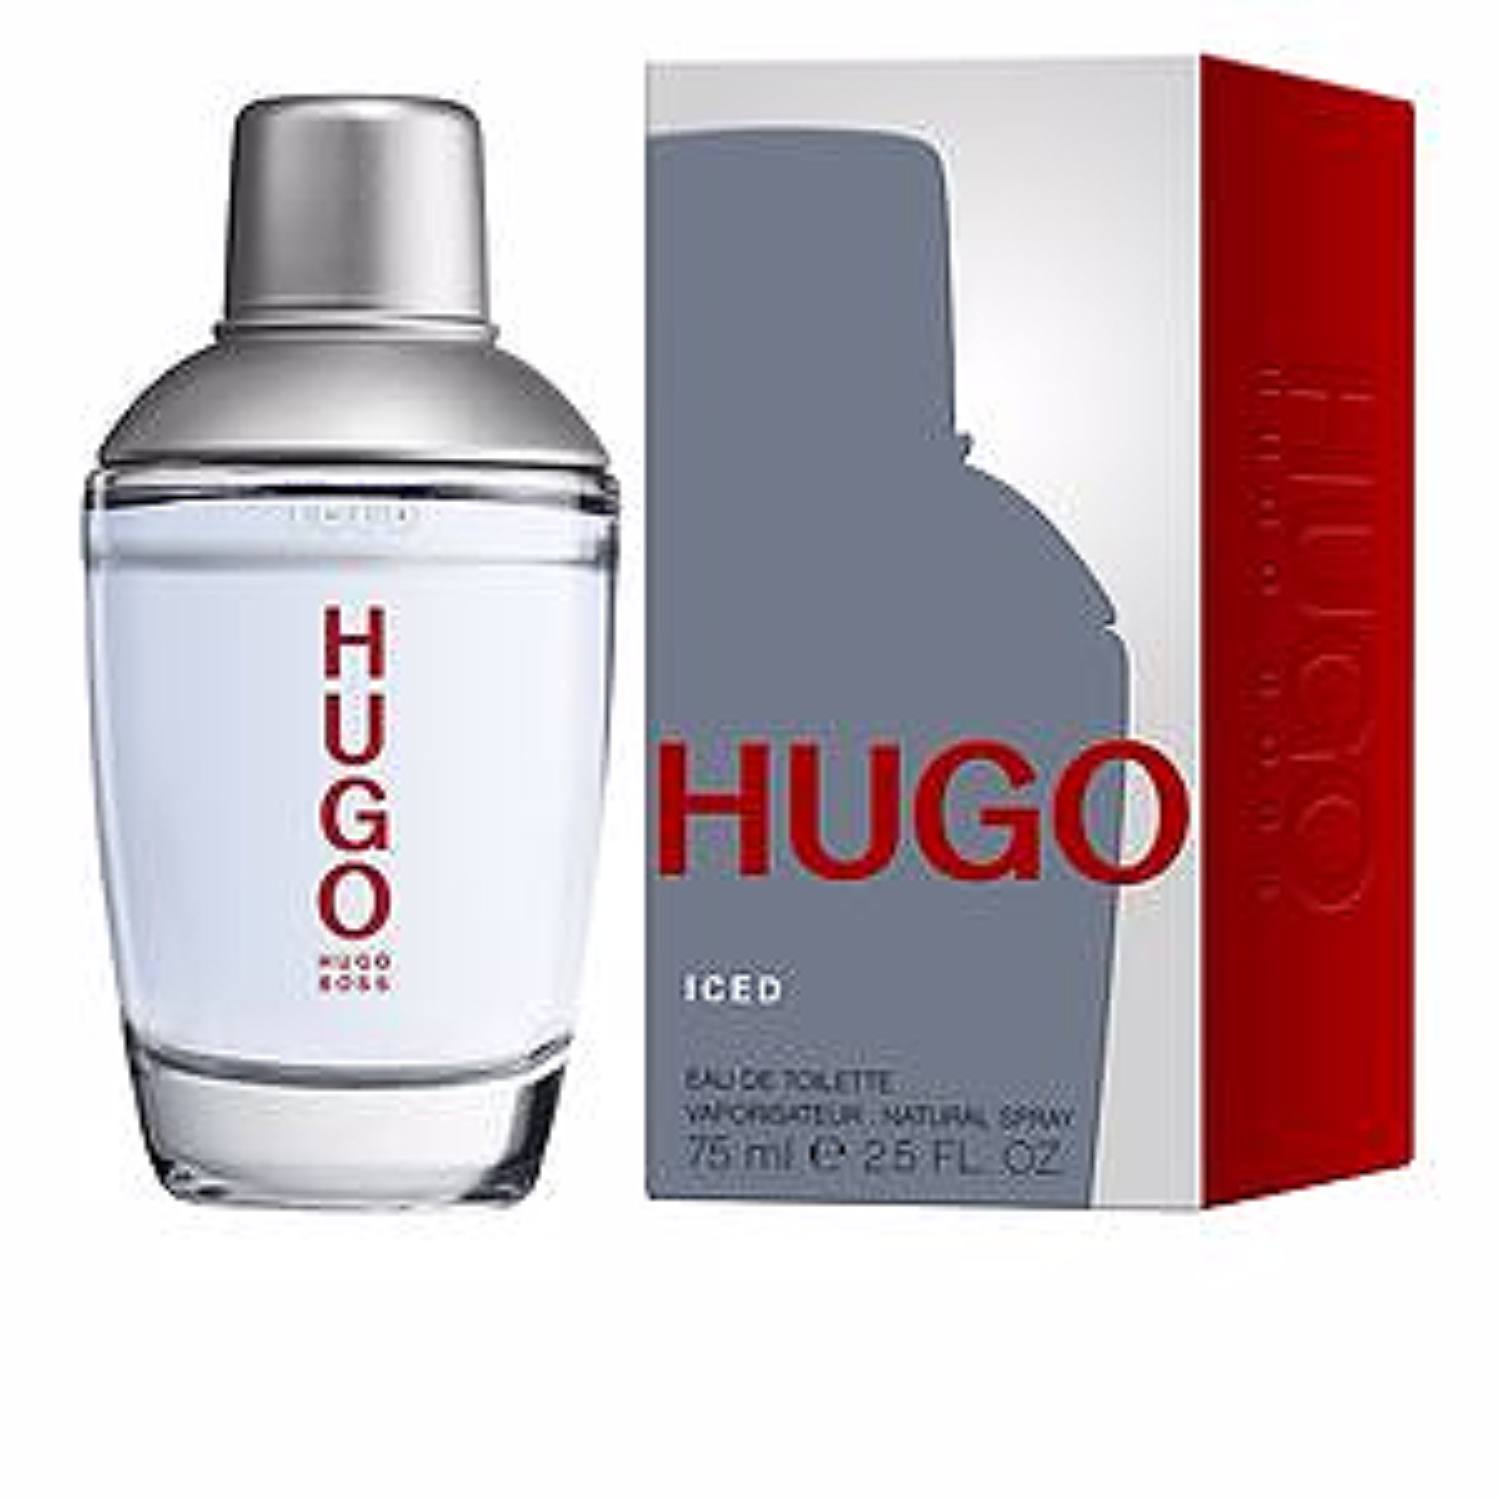 HUGO BOSS  HUGO ICED coctelera eau de Toilette Spray